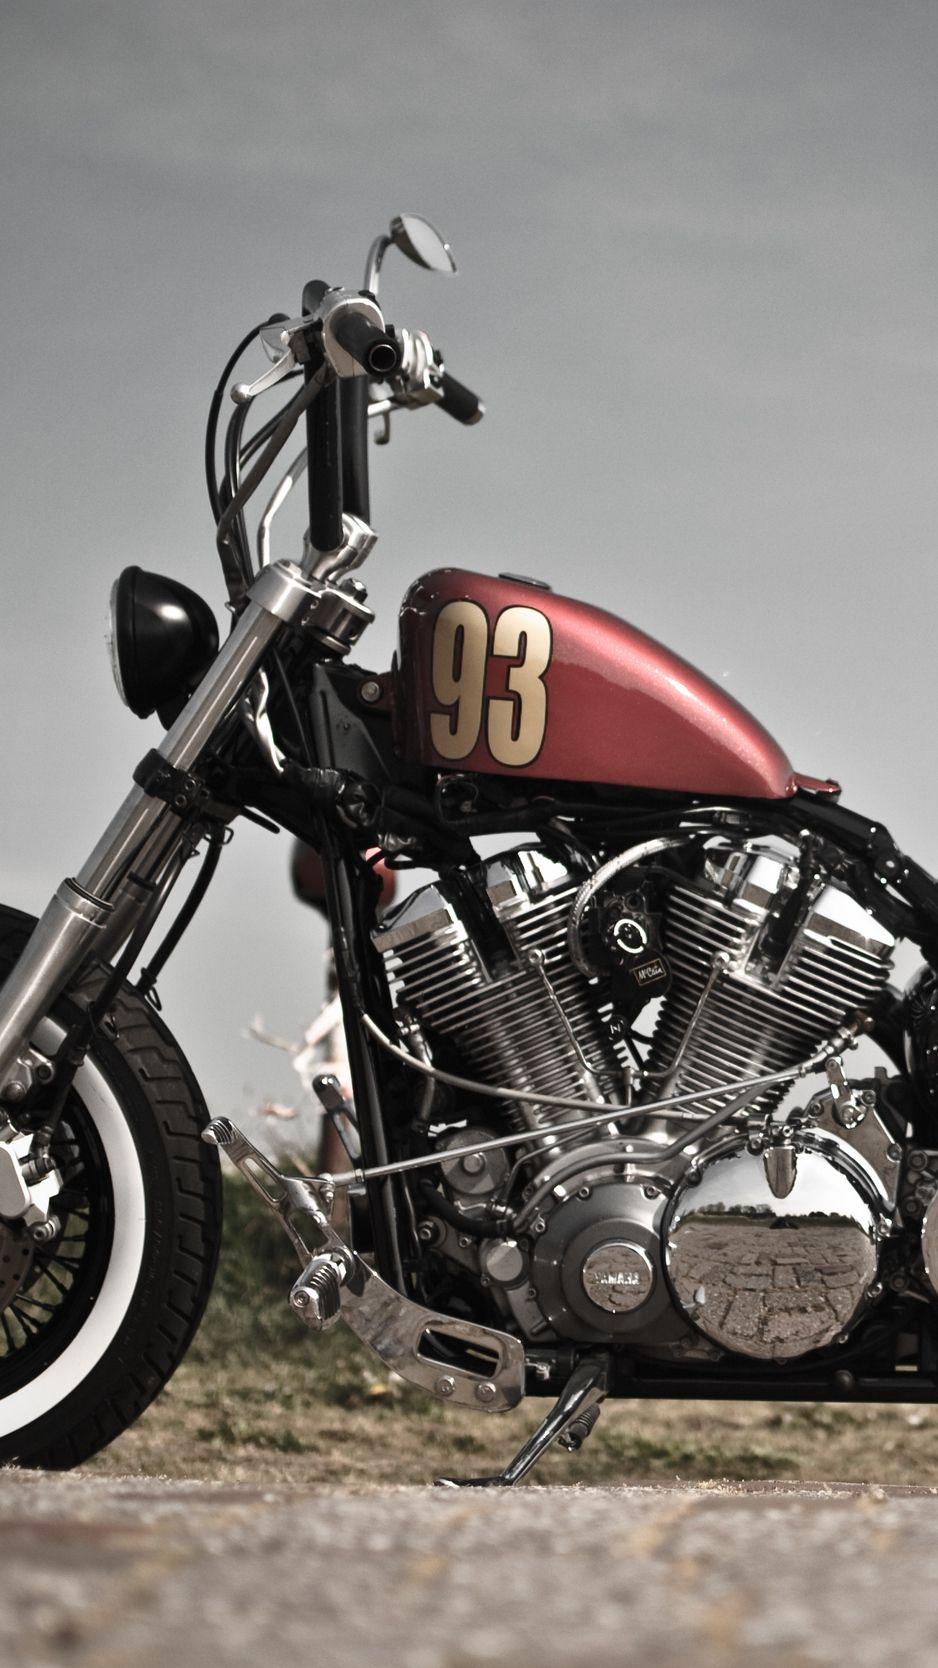 Motorcycle iPhone Wallpapers - Top Free Motorcycle iPhone ...